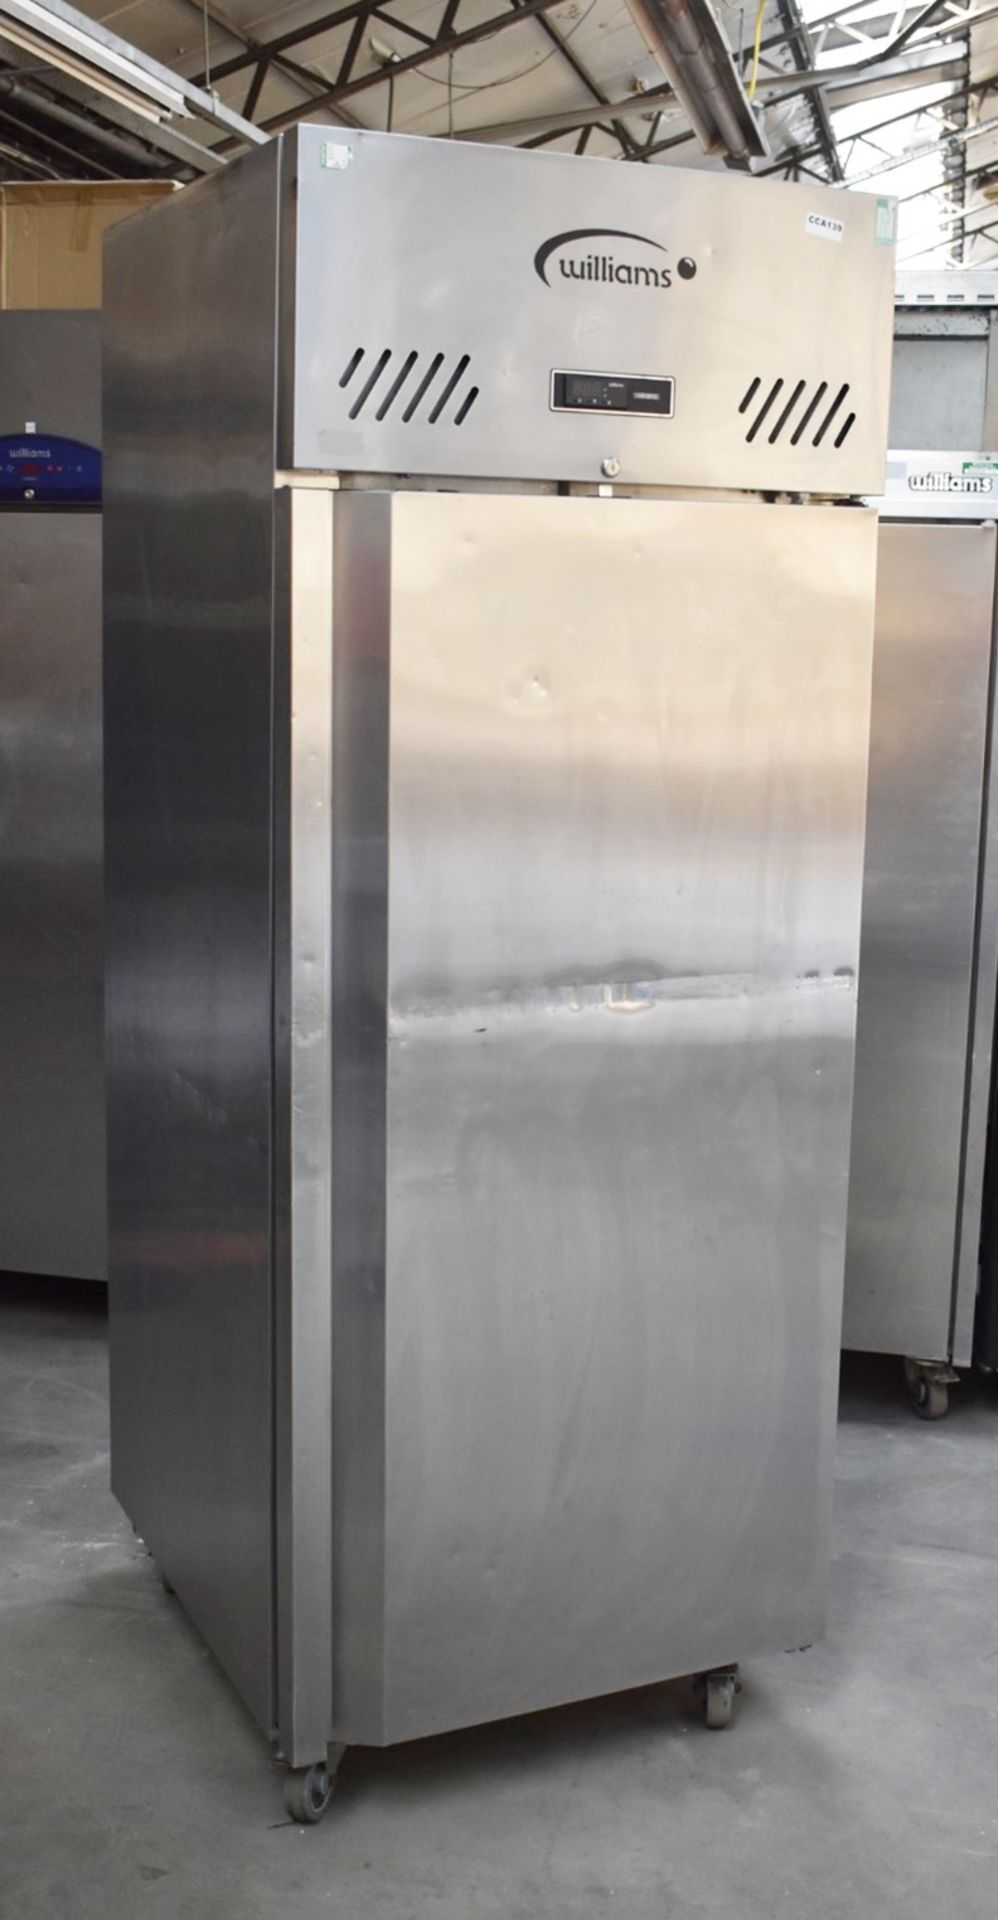 1 x Williams Jade Upright Single Door Refrigerator With Stainless Steel Exterior - Model LJ1SA